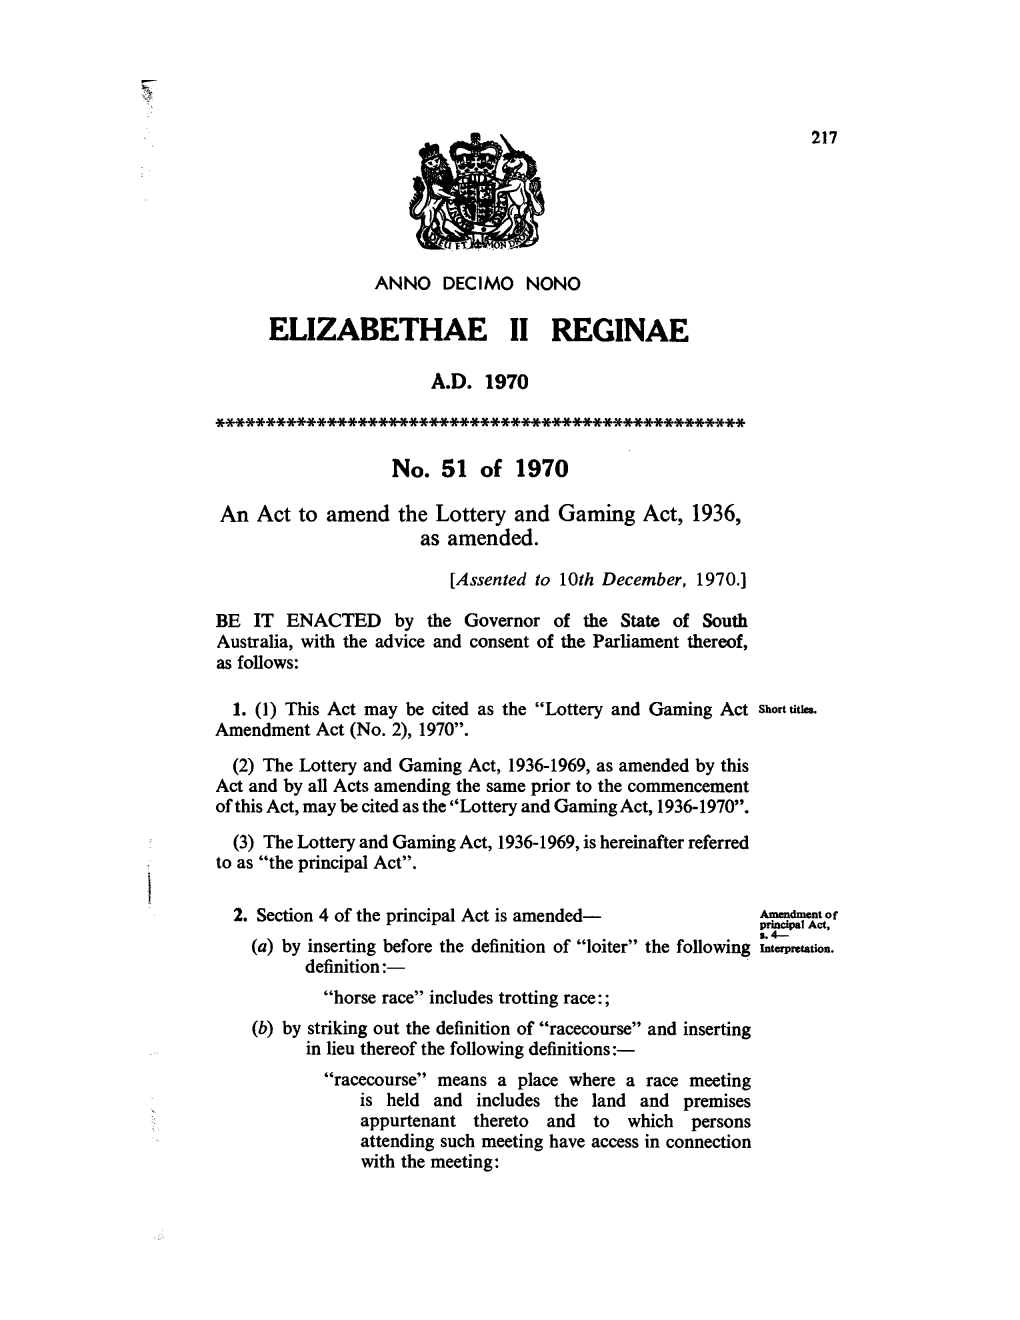 Elizabethae 11 Reginae A.D